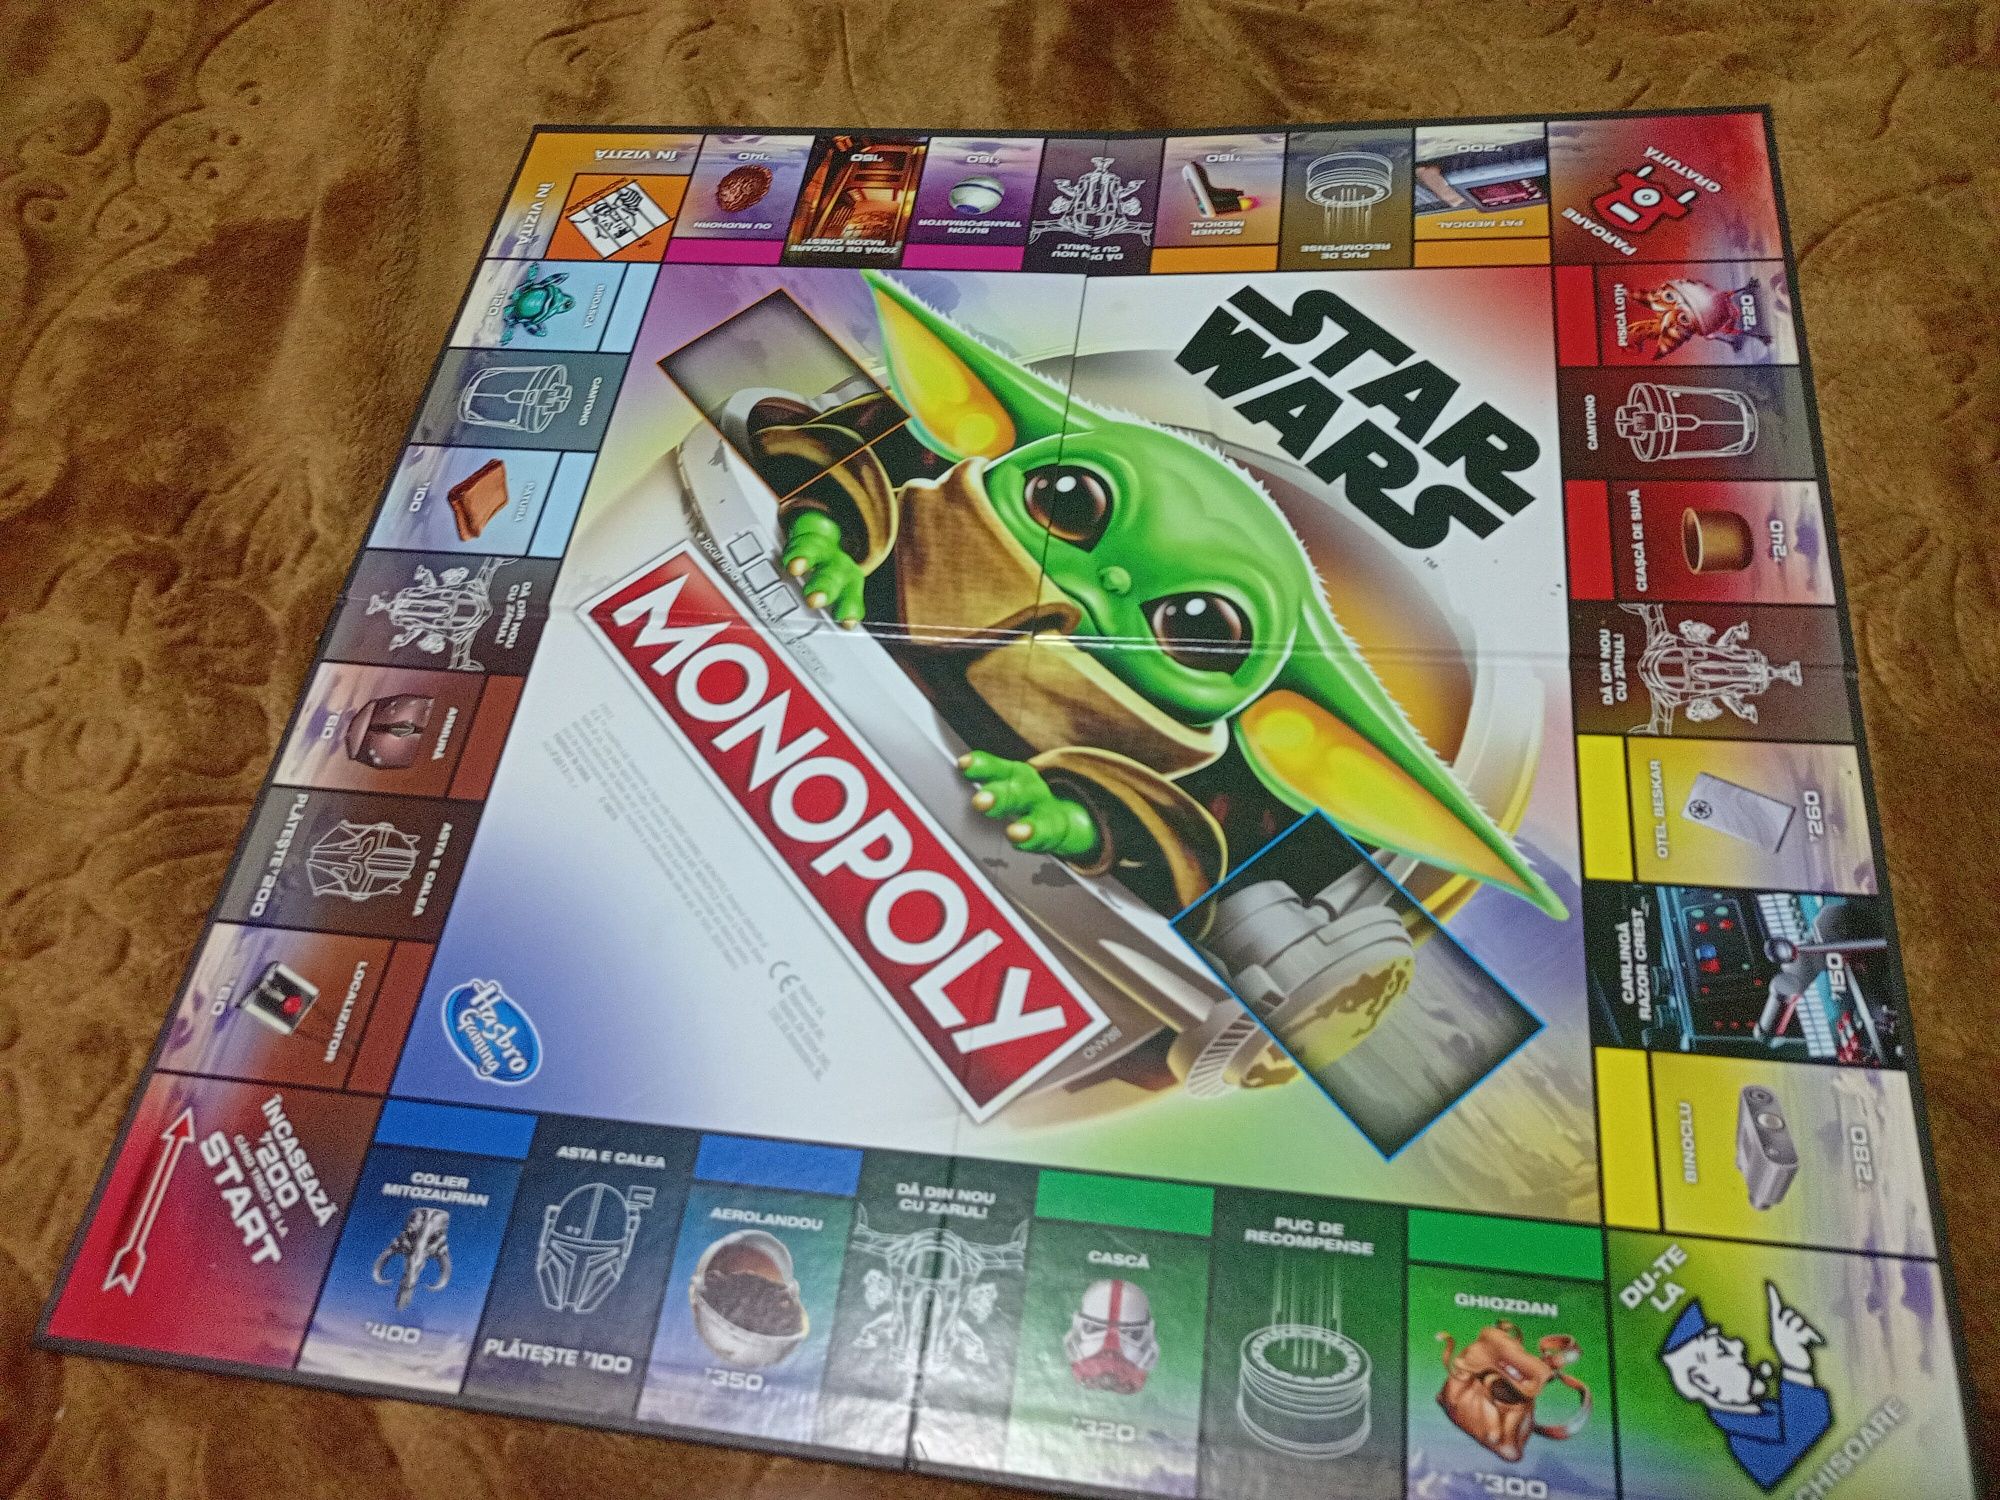 Monopoly star wars